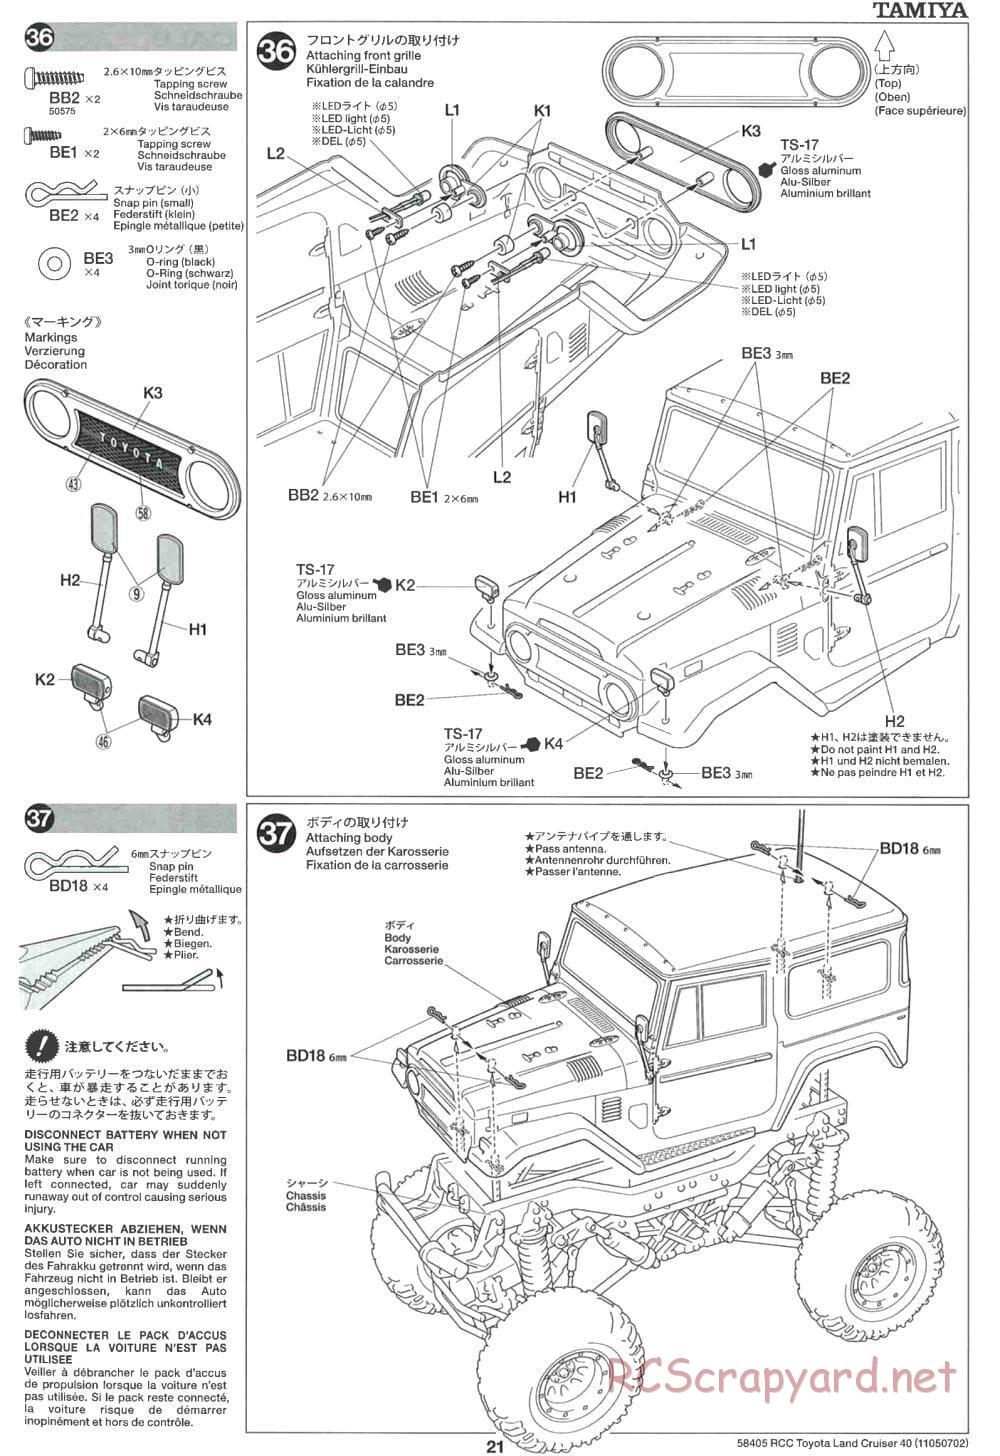 Tamiya - Toyota Land Cruiser 40 - CR-01 Chassis - Manual - Page 21